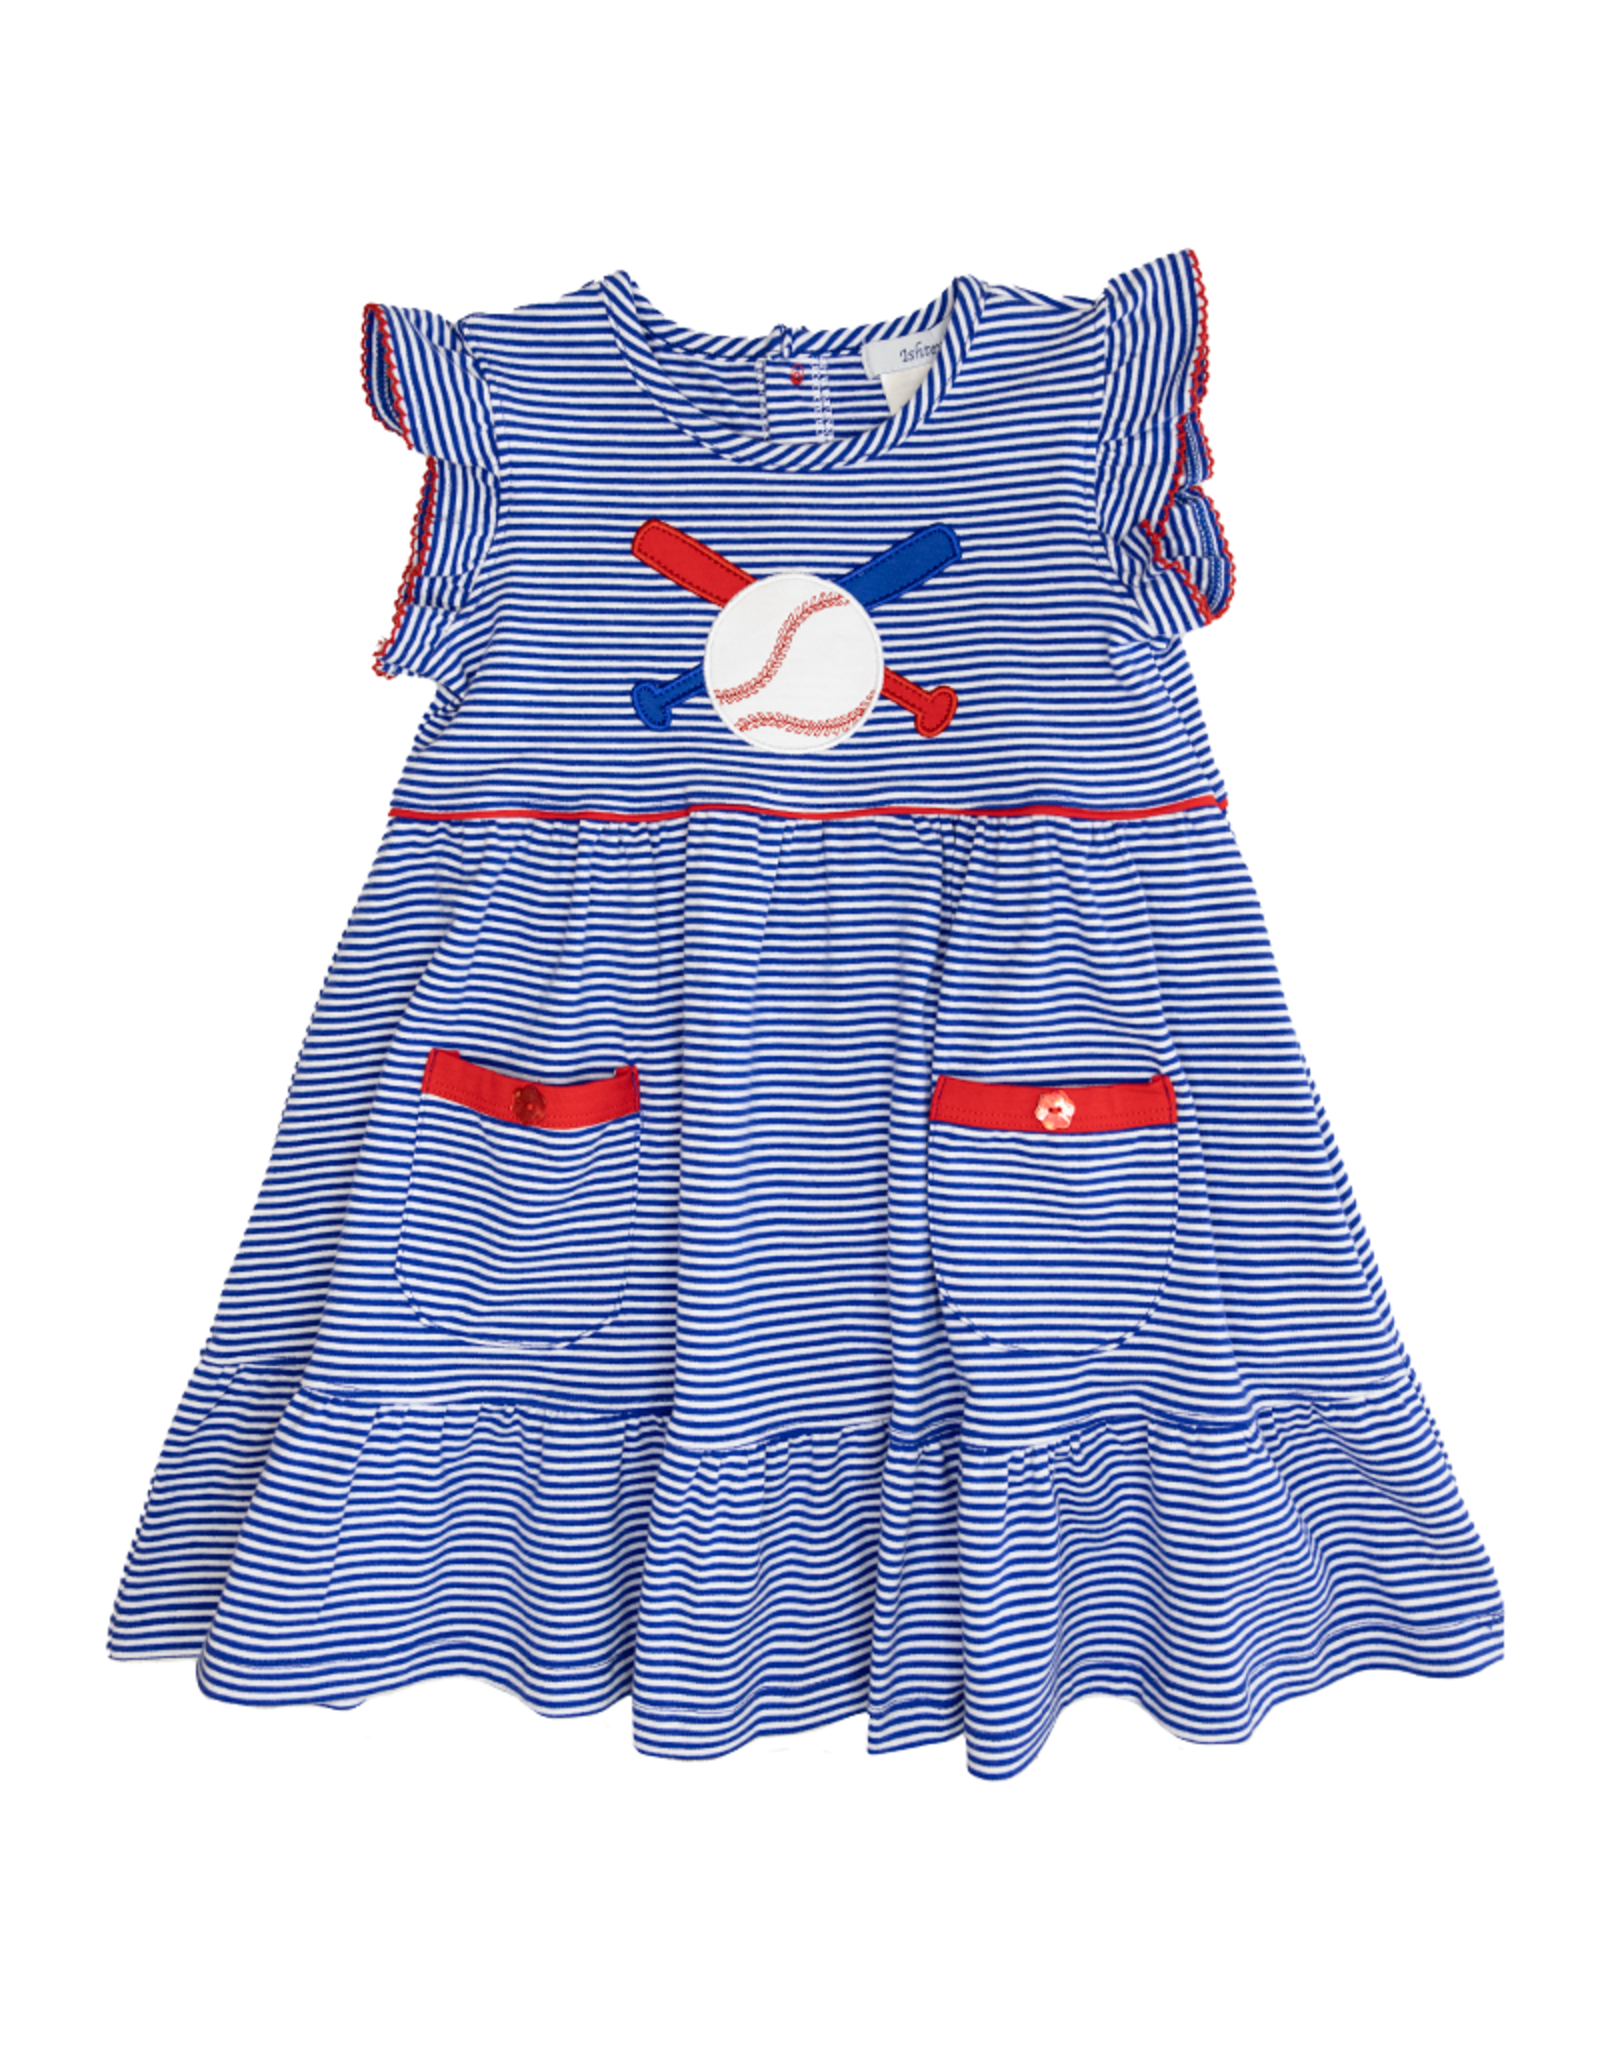 Ishtex 3S213 Baseball Dress